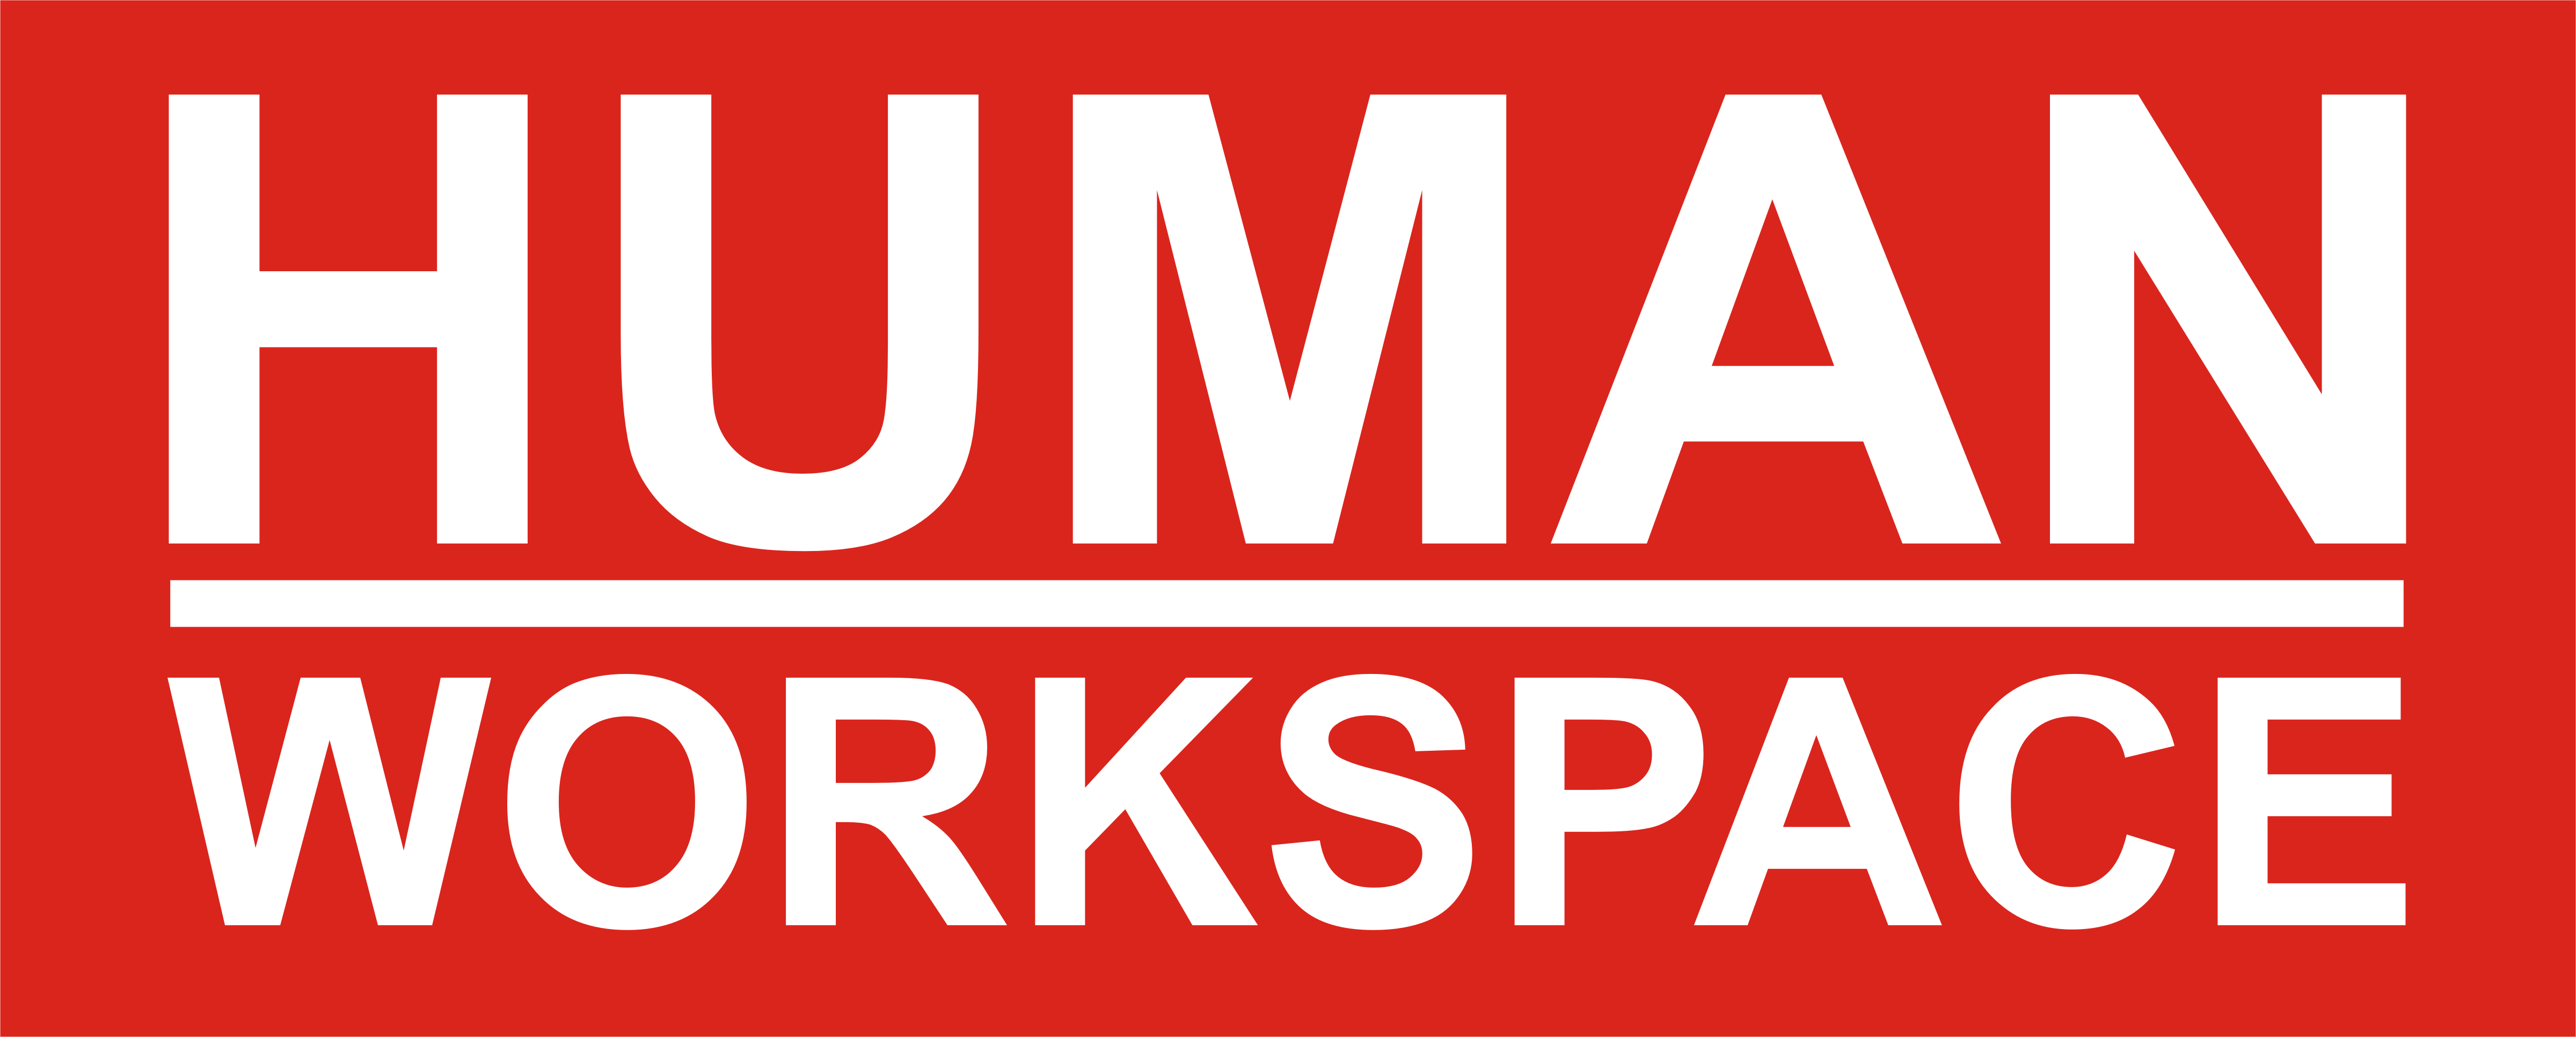 Human Workspace